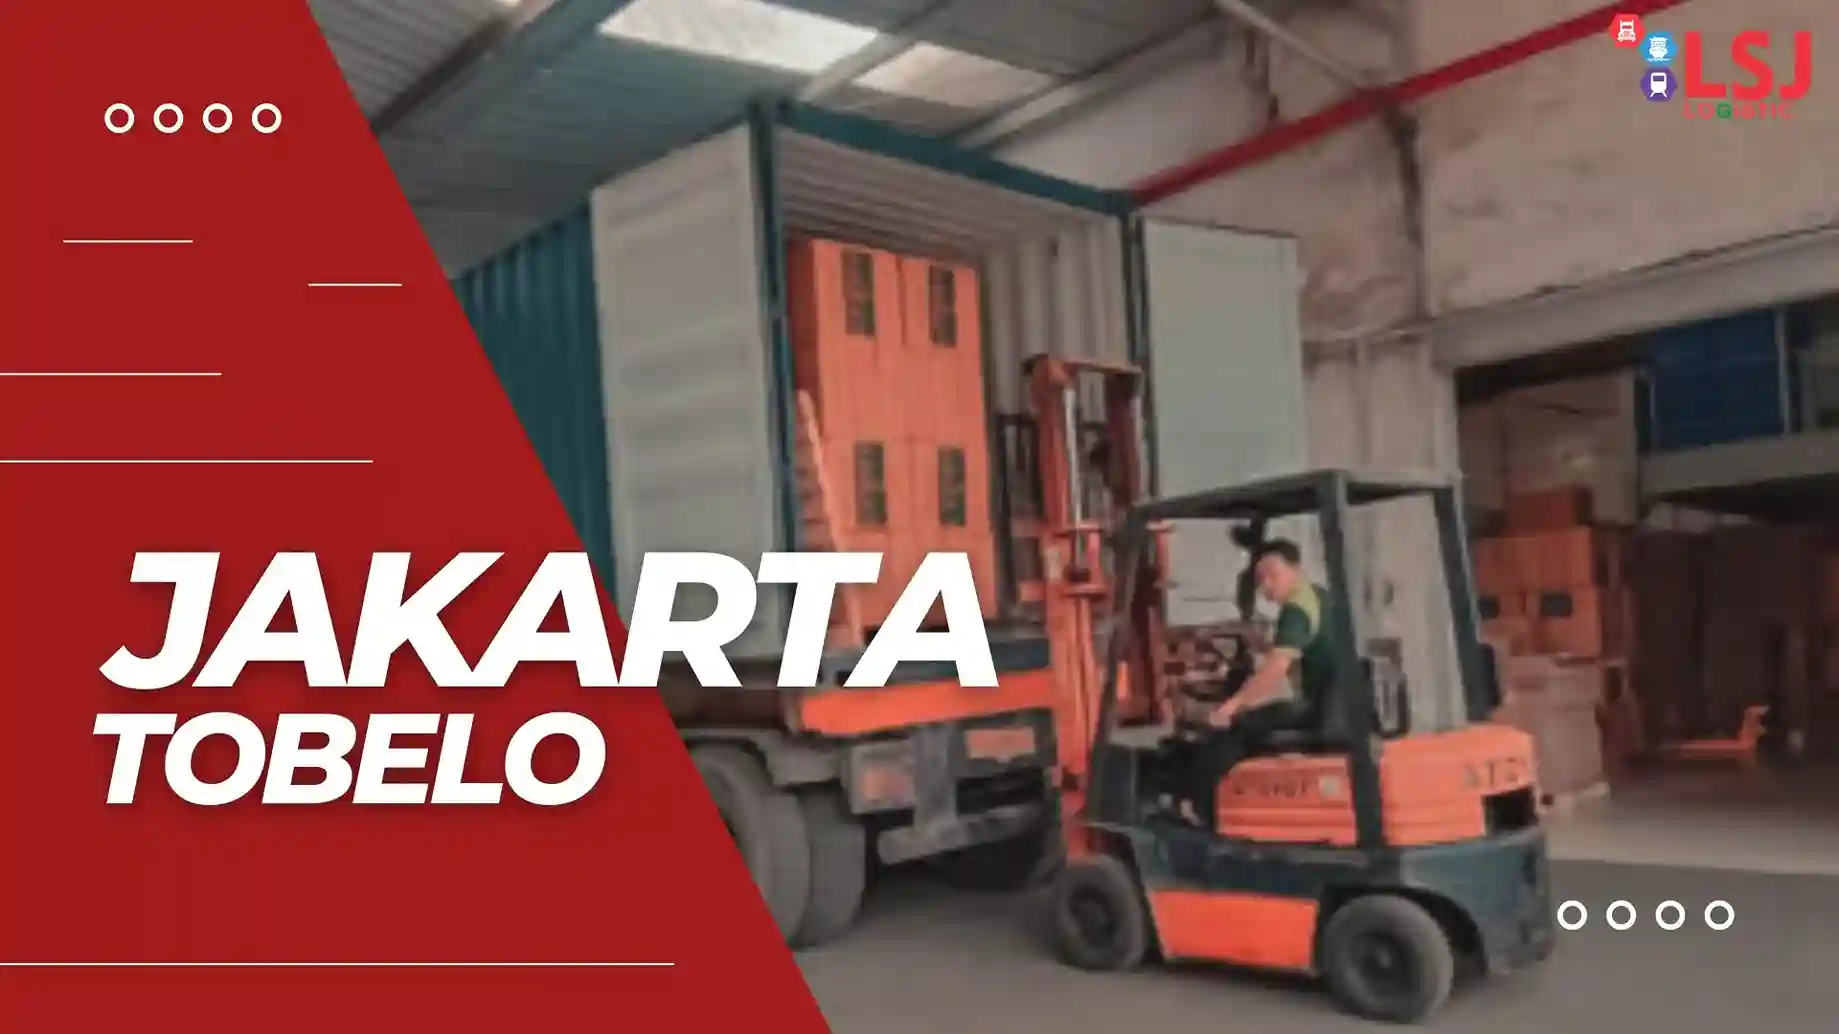 Cargo Container Jakarta Tobelo